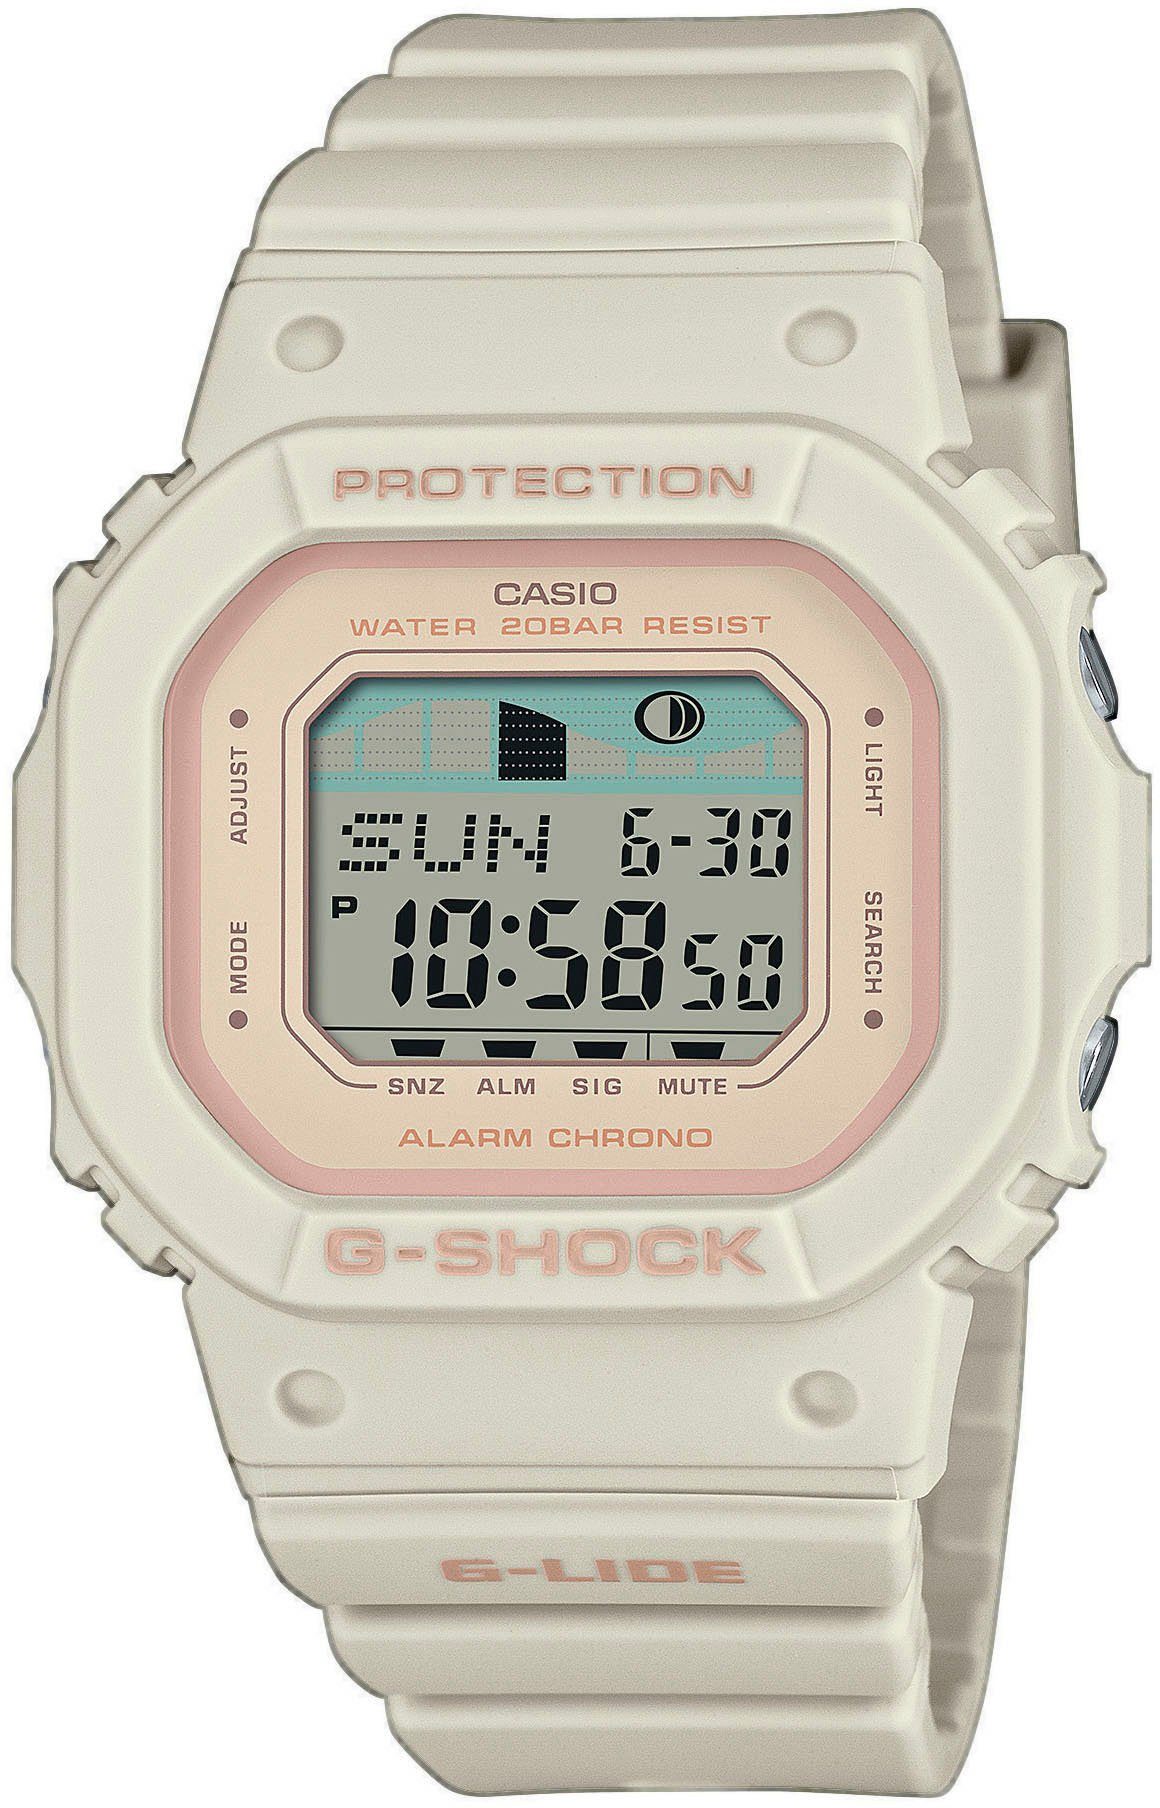 CASIO Chronograph GLX-S5600-7ER G-SHOCK